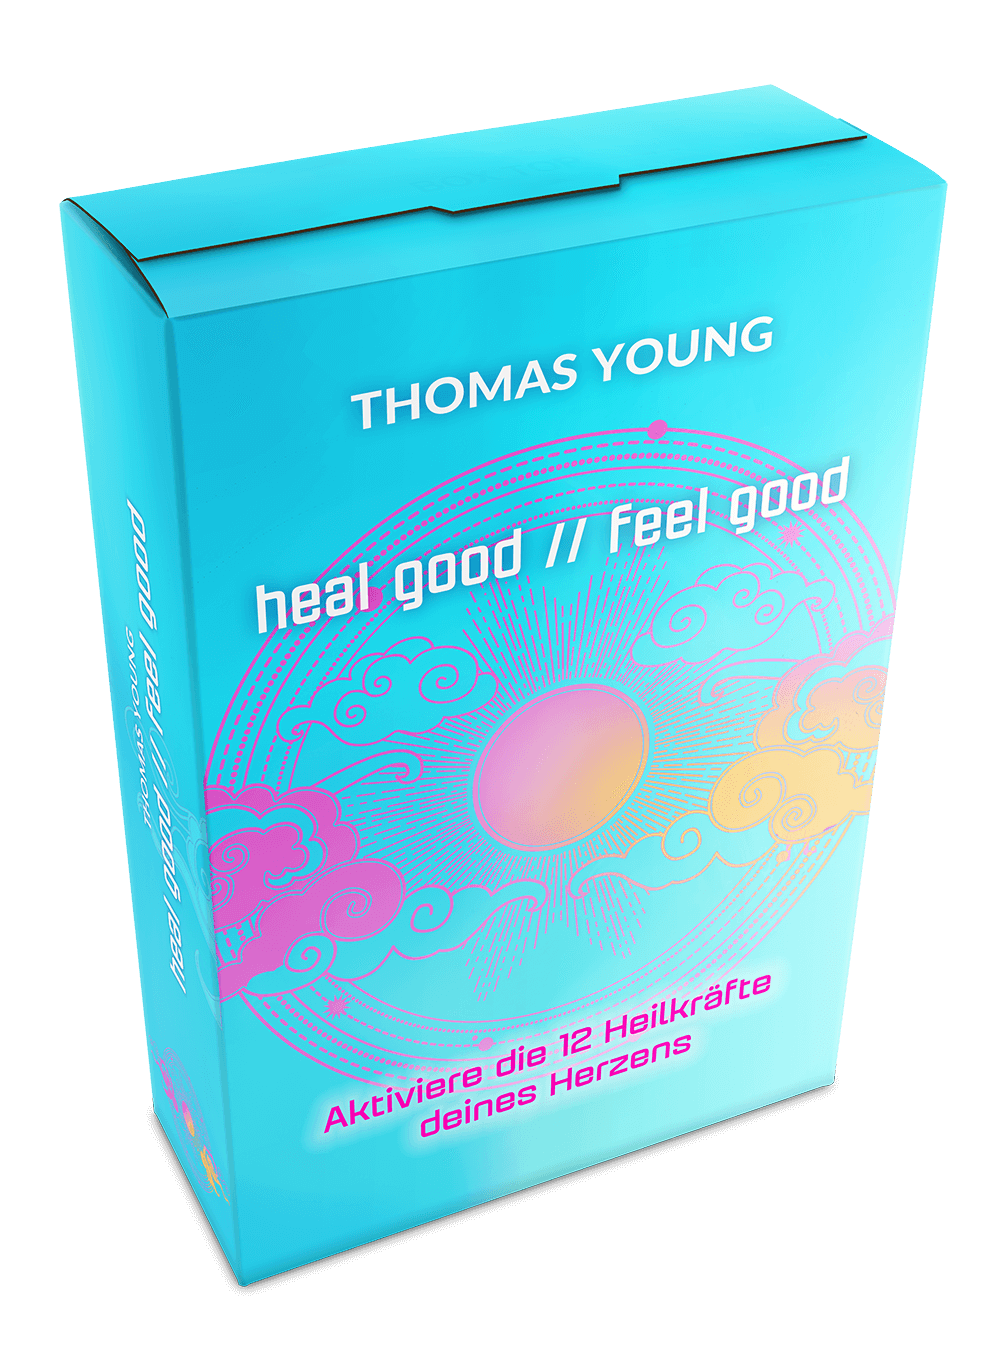 thomas-young-heal-good-feel-good